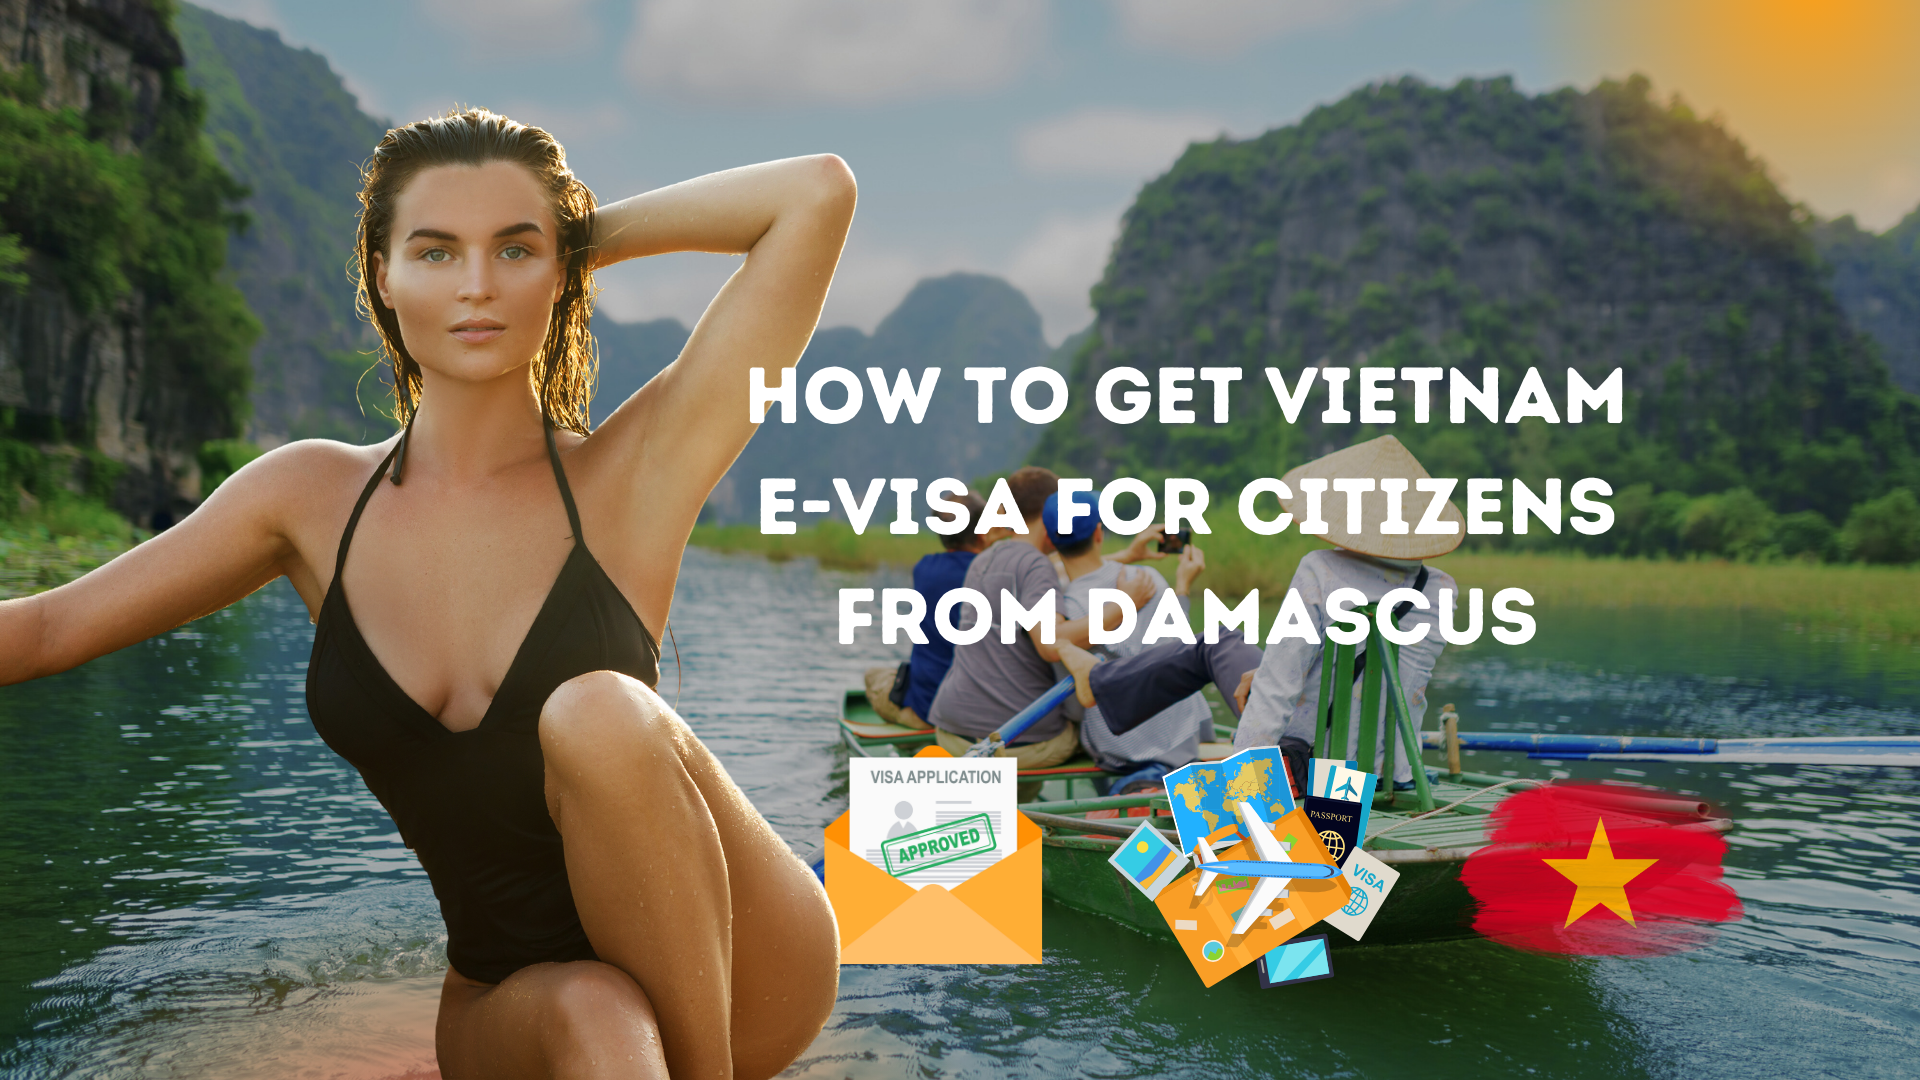 Vietnam Evisa for Citizens from Damascus